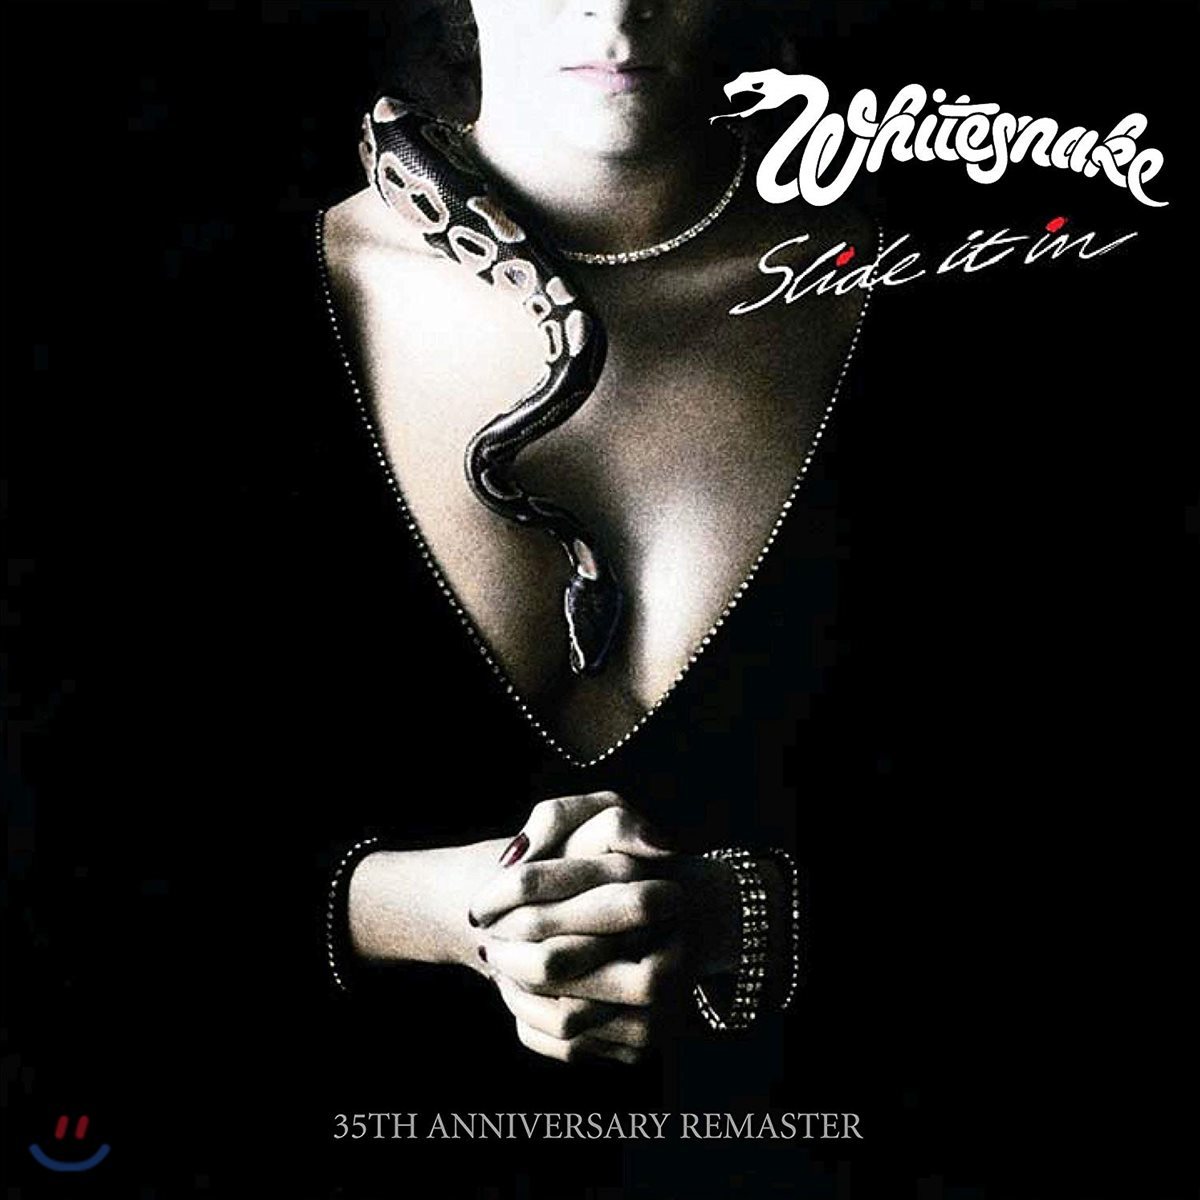 Whitesnake - Slide It In 화이트스네이크 7집 발매 35주년 기념반 [US Remix]